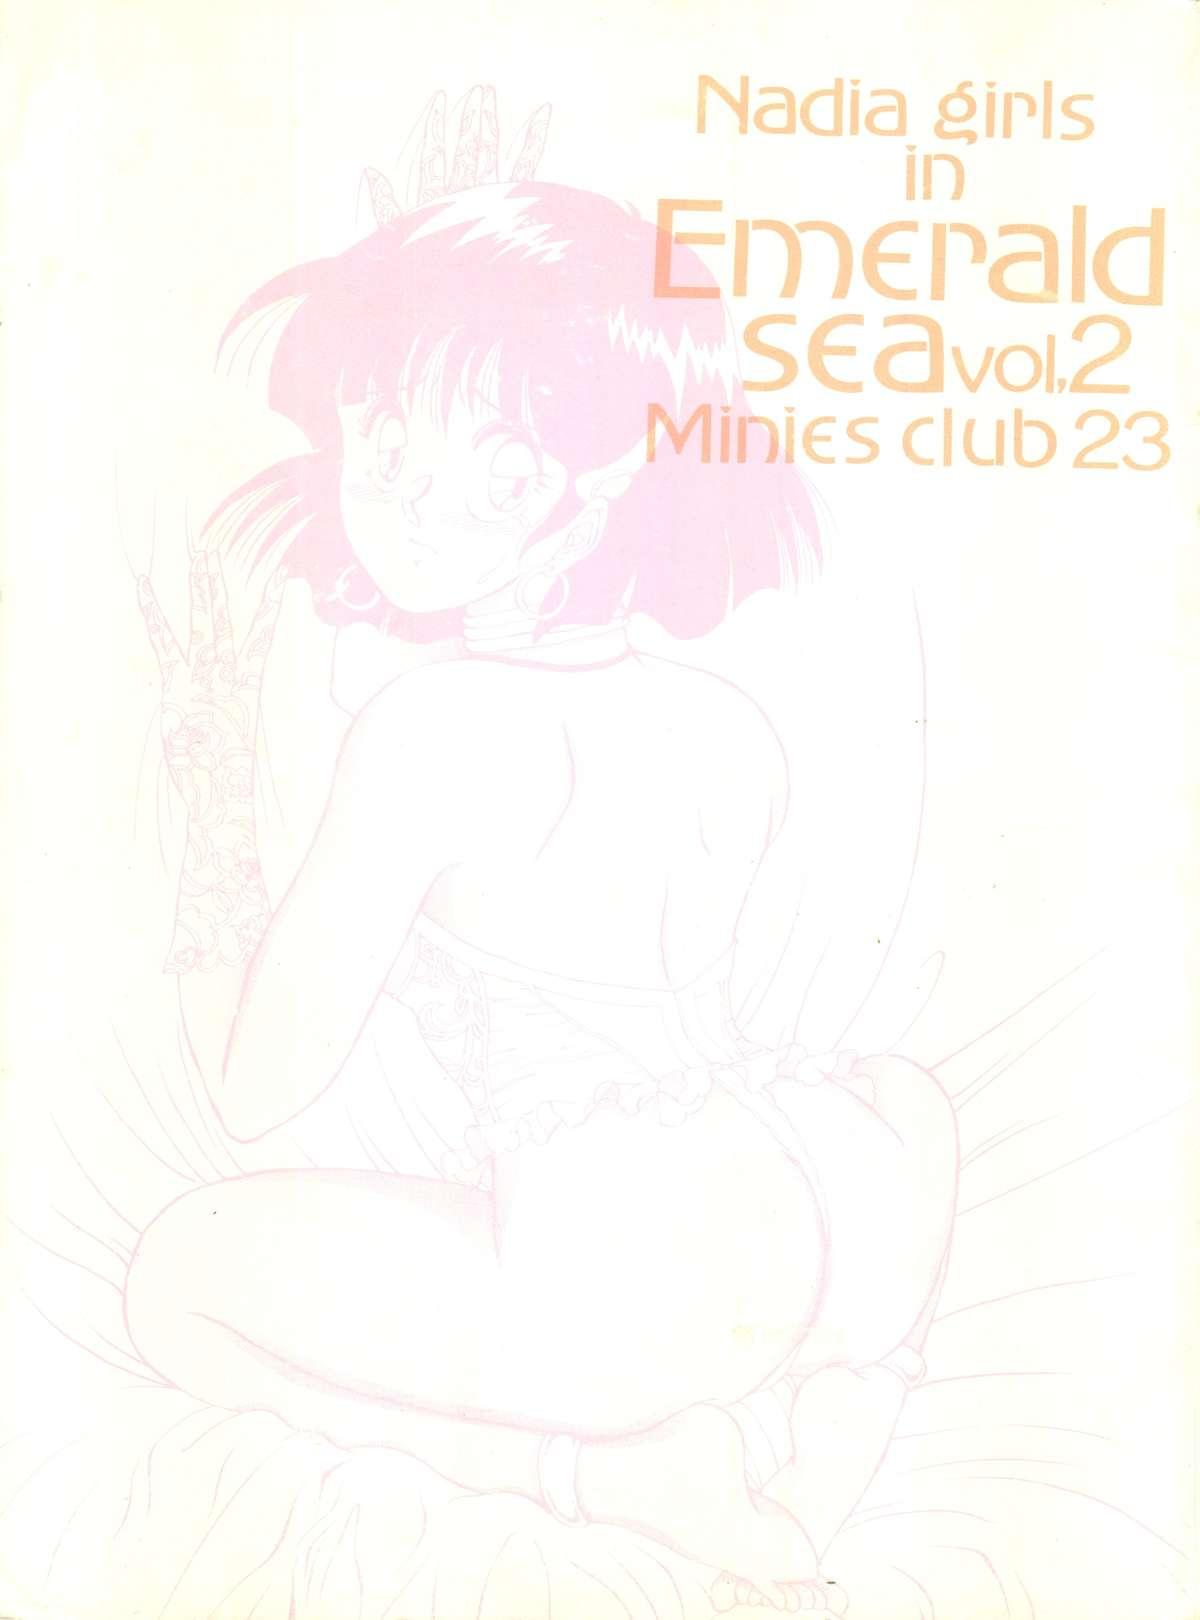 Riding Cock Nadia Girls in Emerald Sea vol. 2 - Minies Club 23 - Fushigi no umi no nadia Mojada - Picture 1